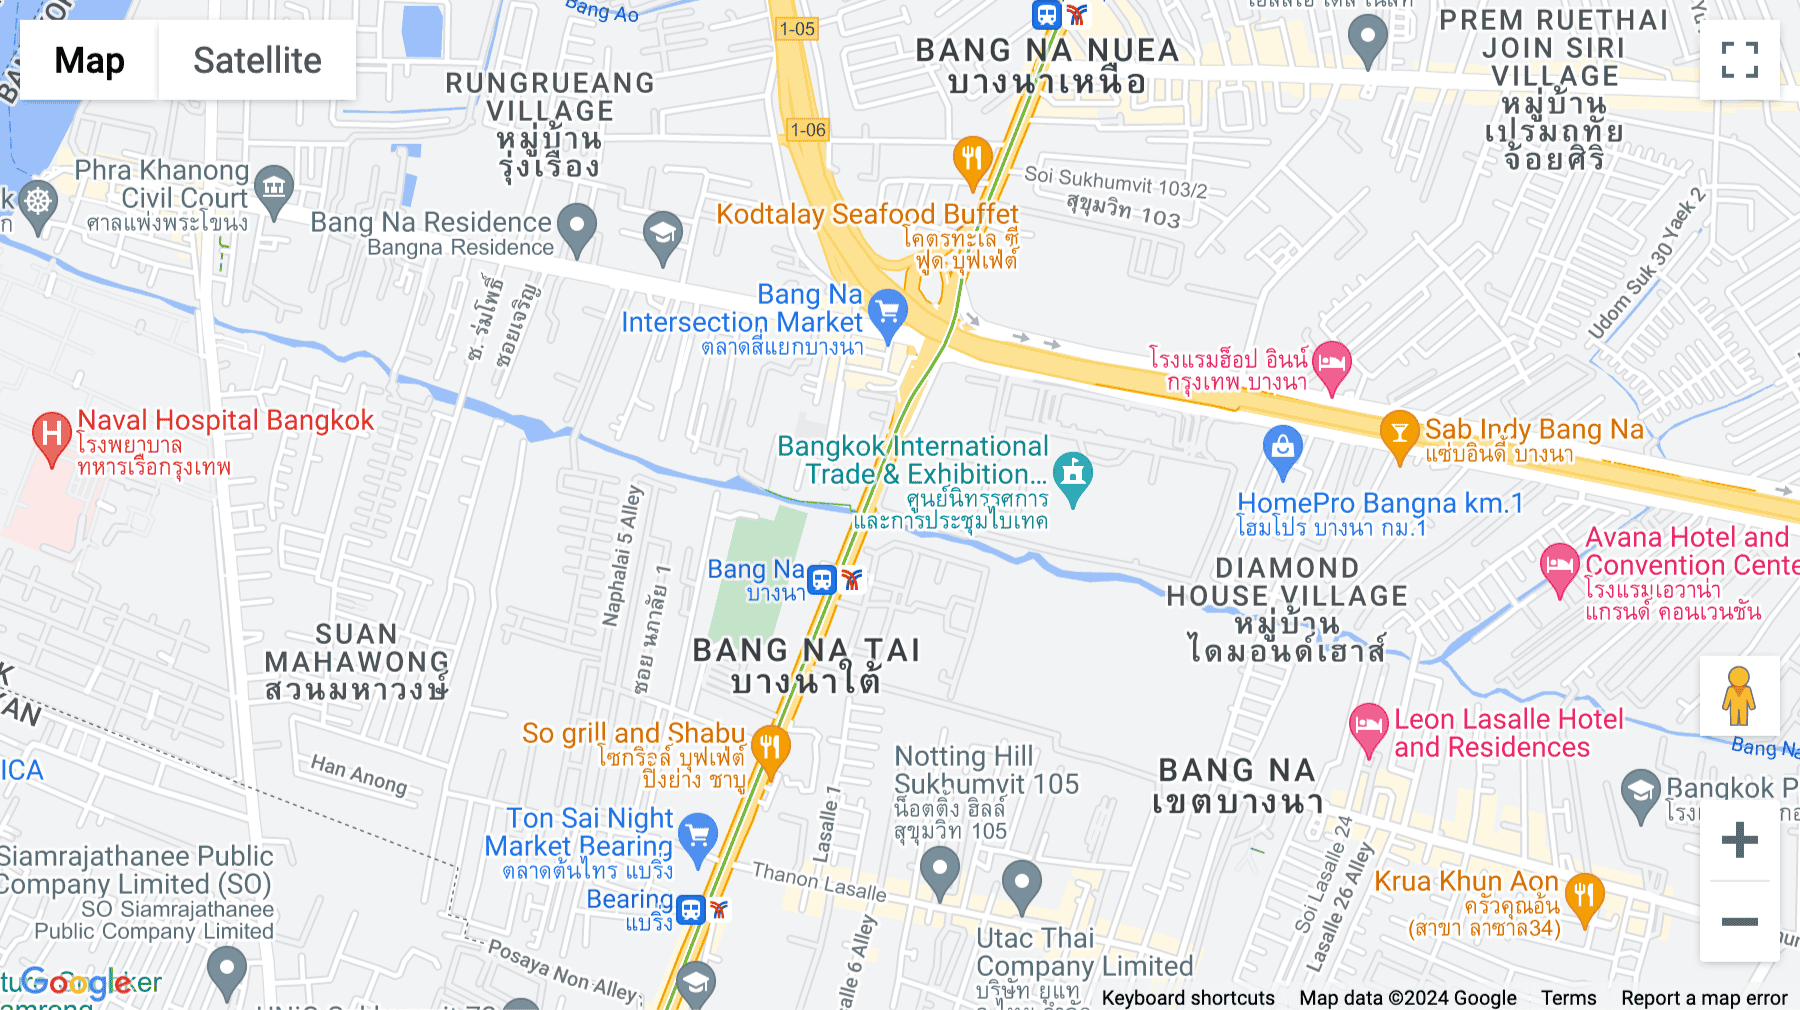 Click for interative map of 23rd Floor, Bhiraj Tower at BITEC 4345 Sukhumvit Road, Bangna Sub-District, Bangkok